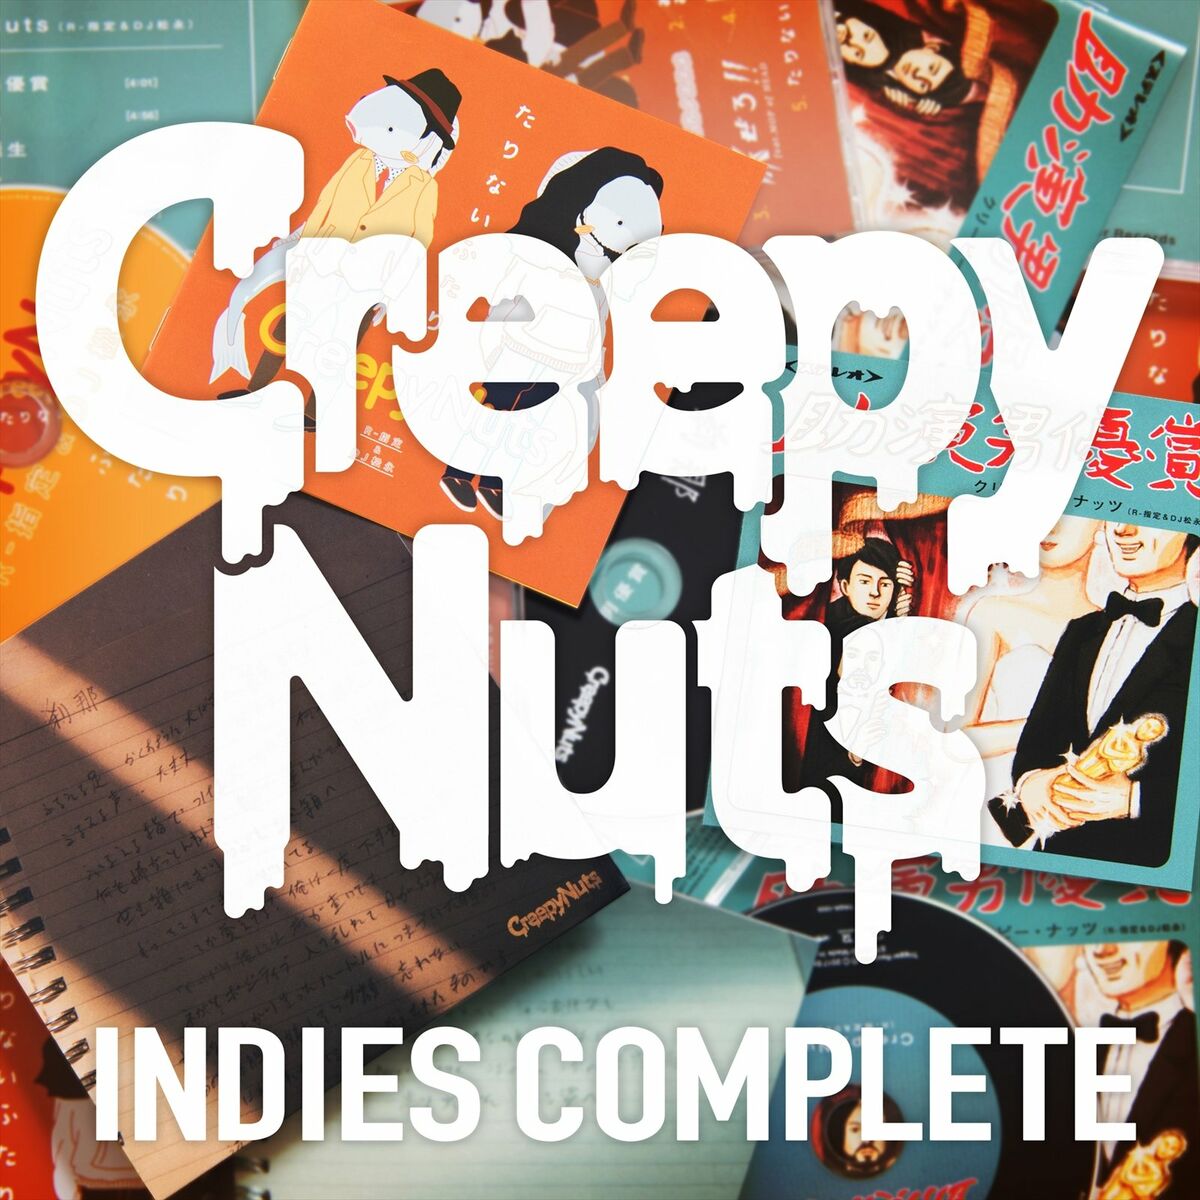 Creepy Nuts: albums, songs, playlists | Listen on Deezer